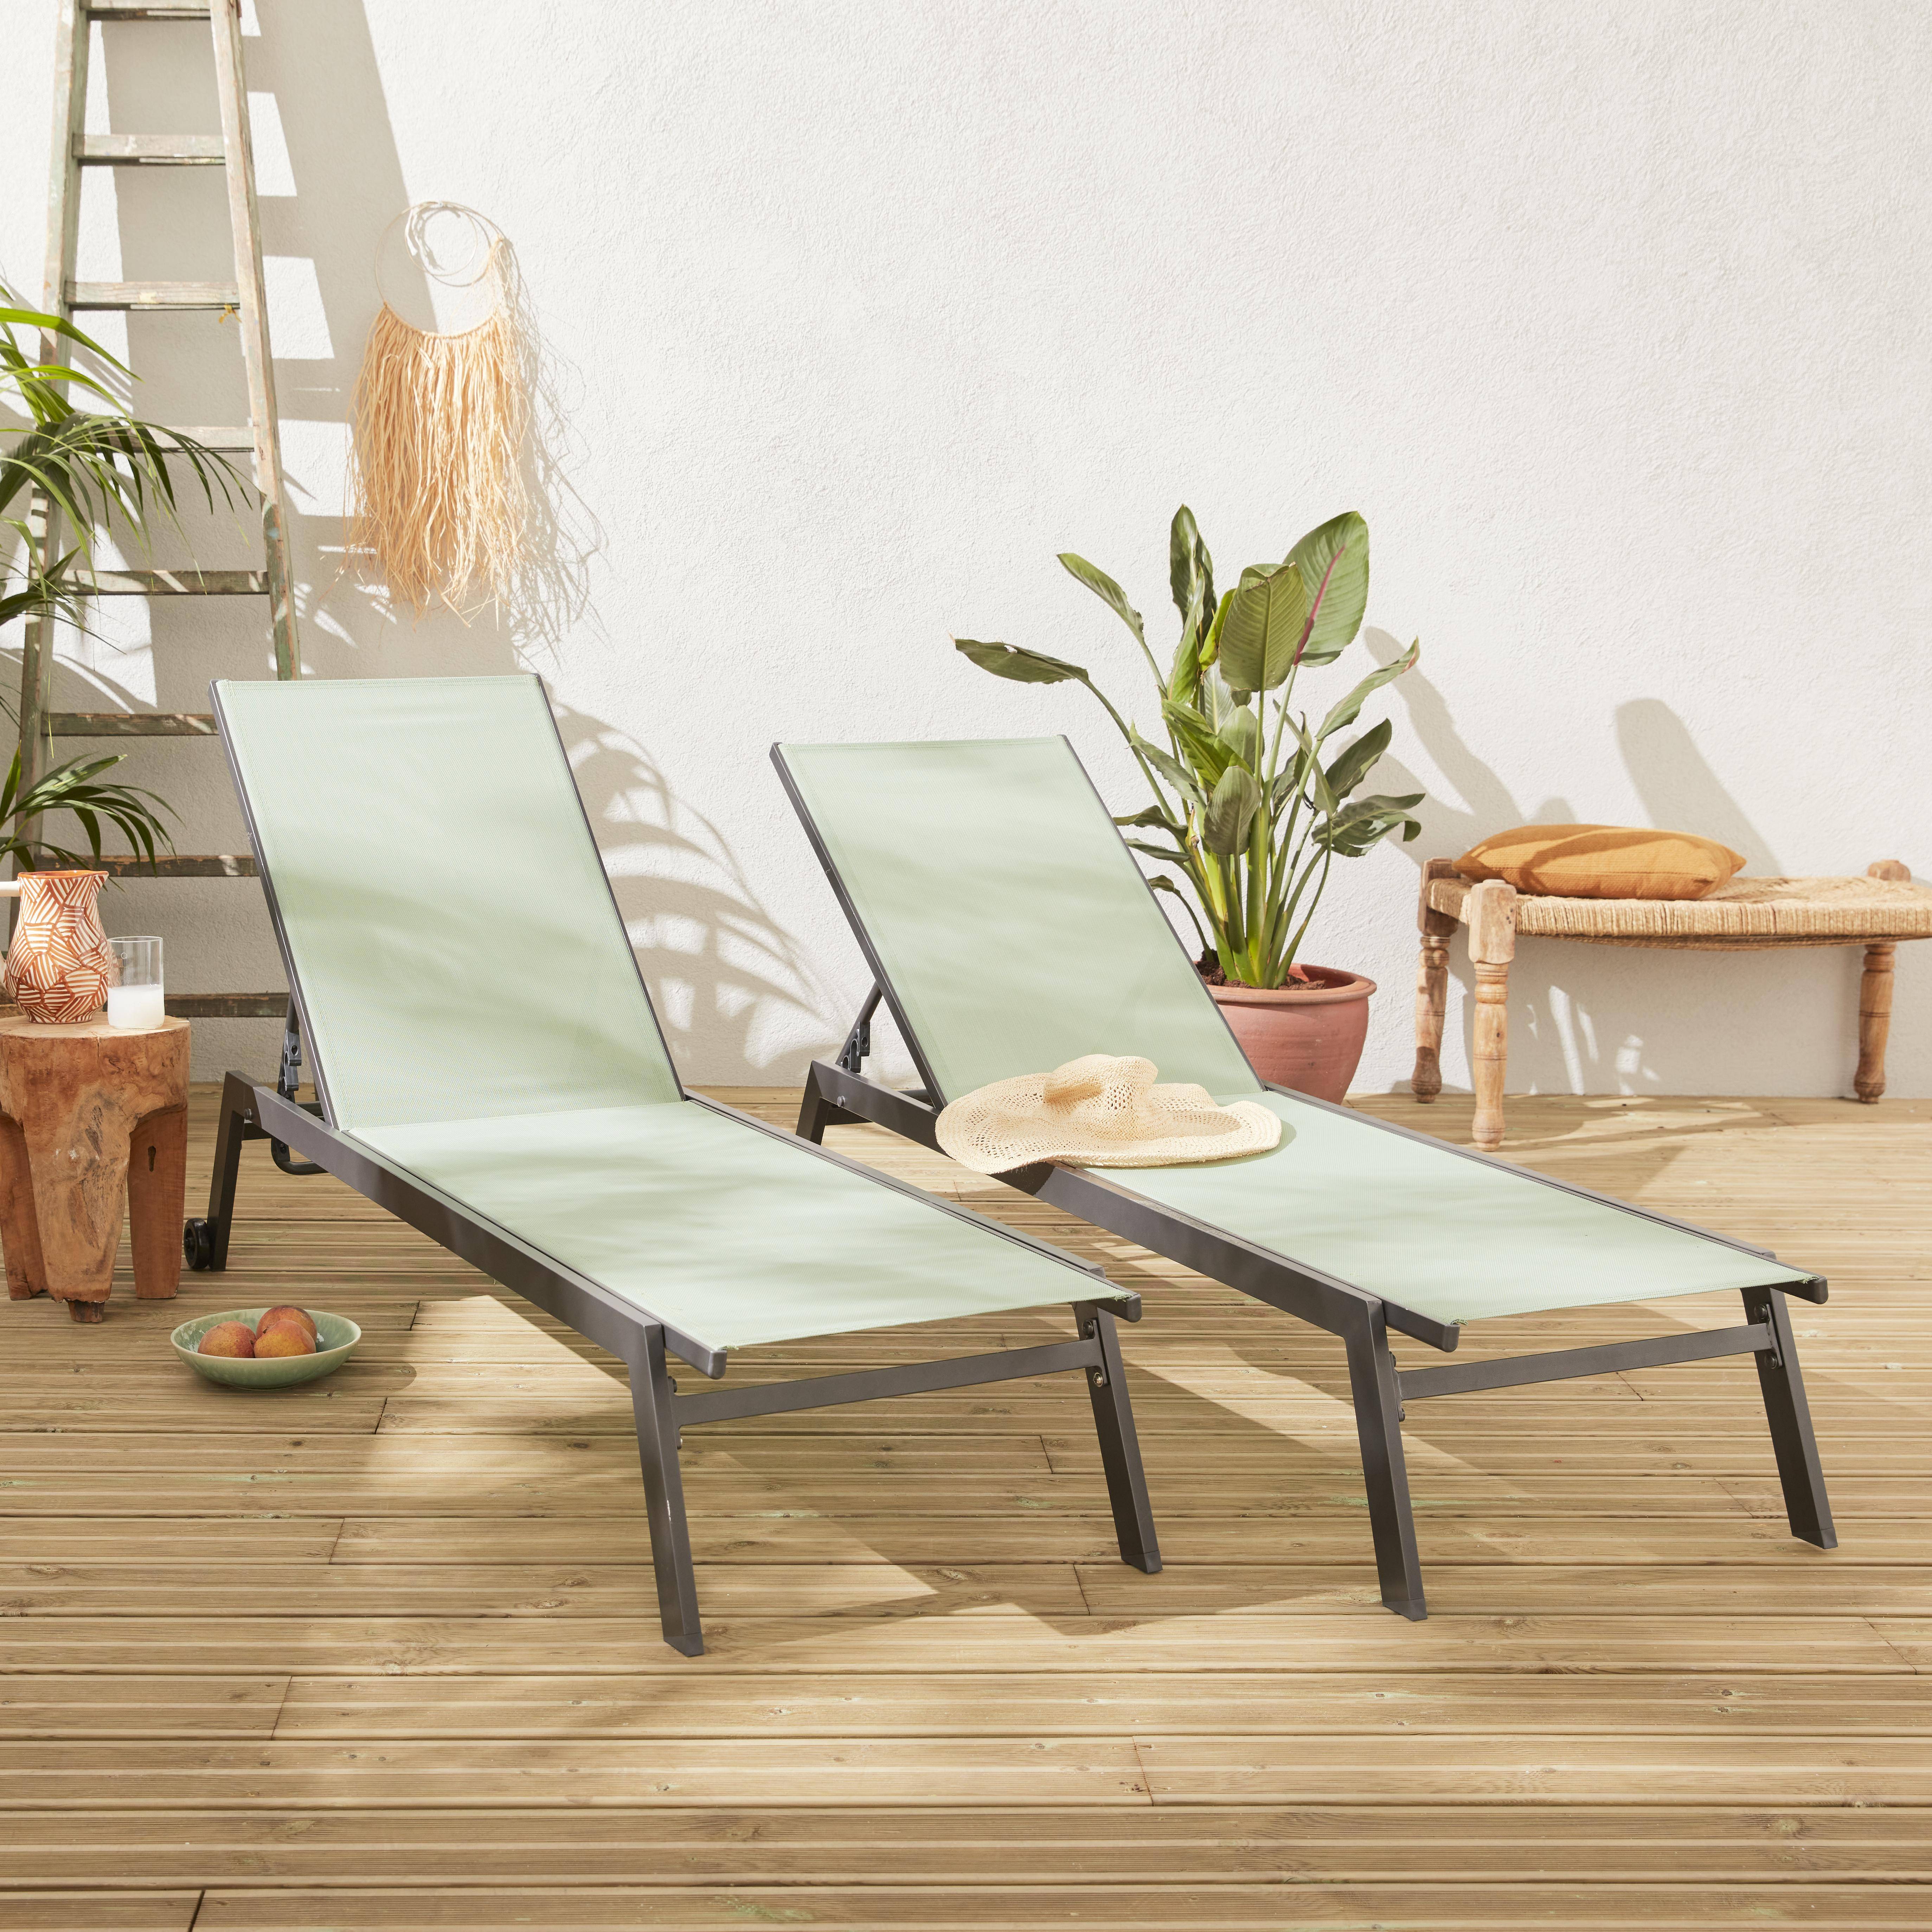 Pair of multi-position aluminium sun loungers with wheels - Elsa - Anthracite frame, Sage Green textilene fabric Photo1